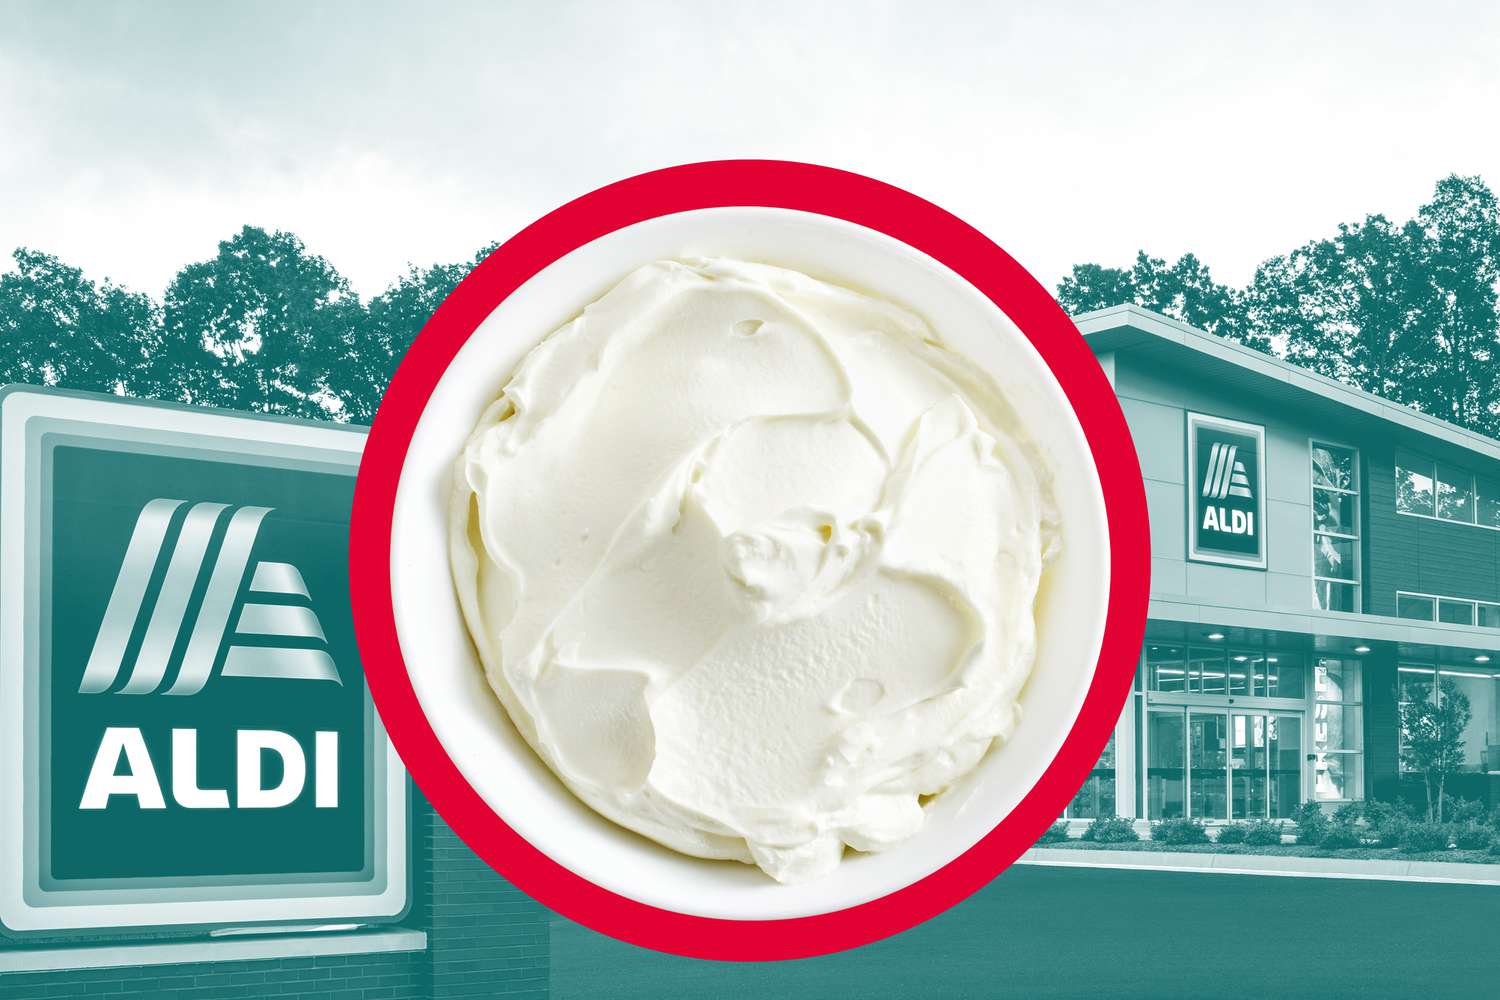 Aldi Cream Cheese Recalled Nationwide [Video]